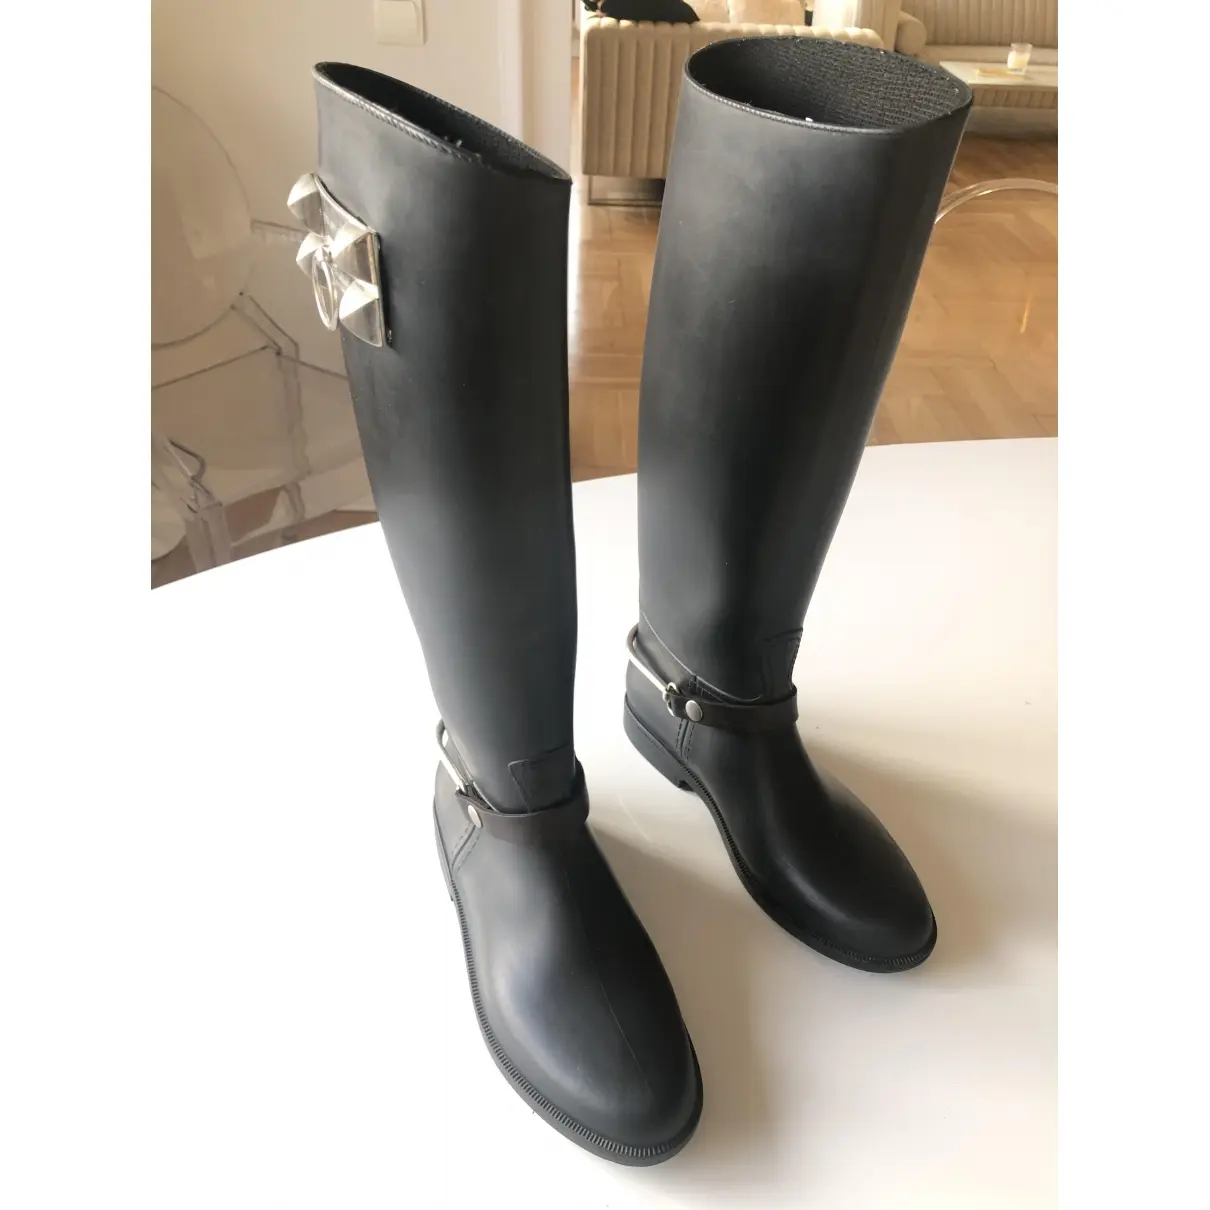 Philipp Plein Wellington boots for sale